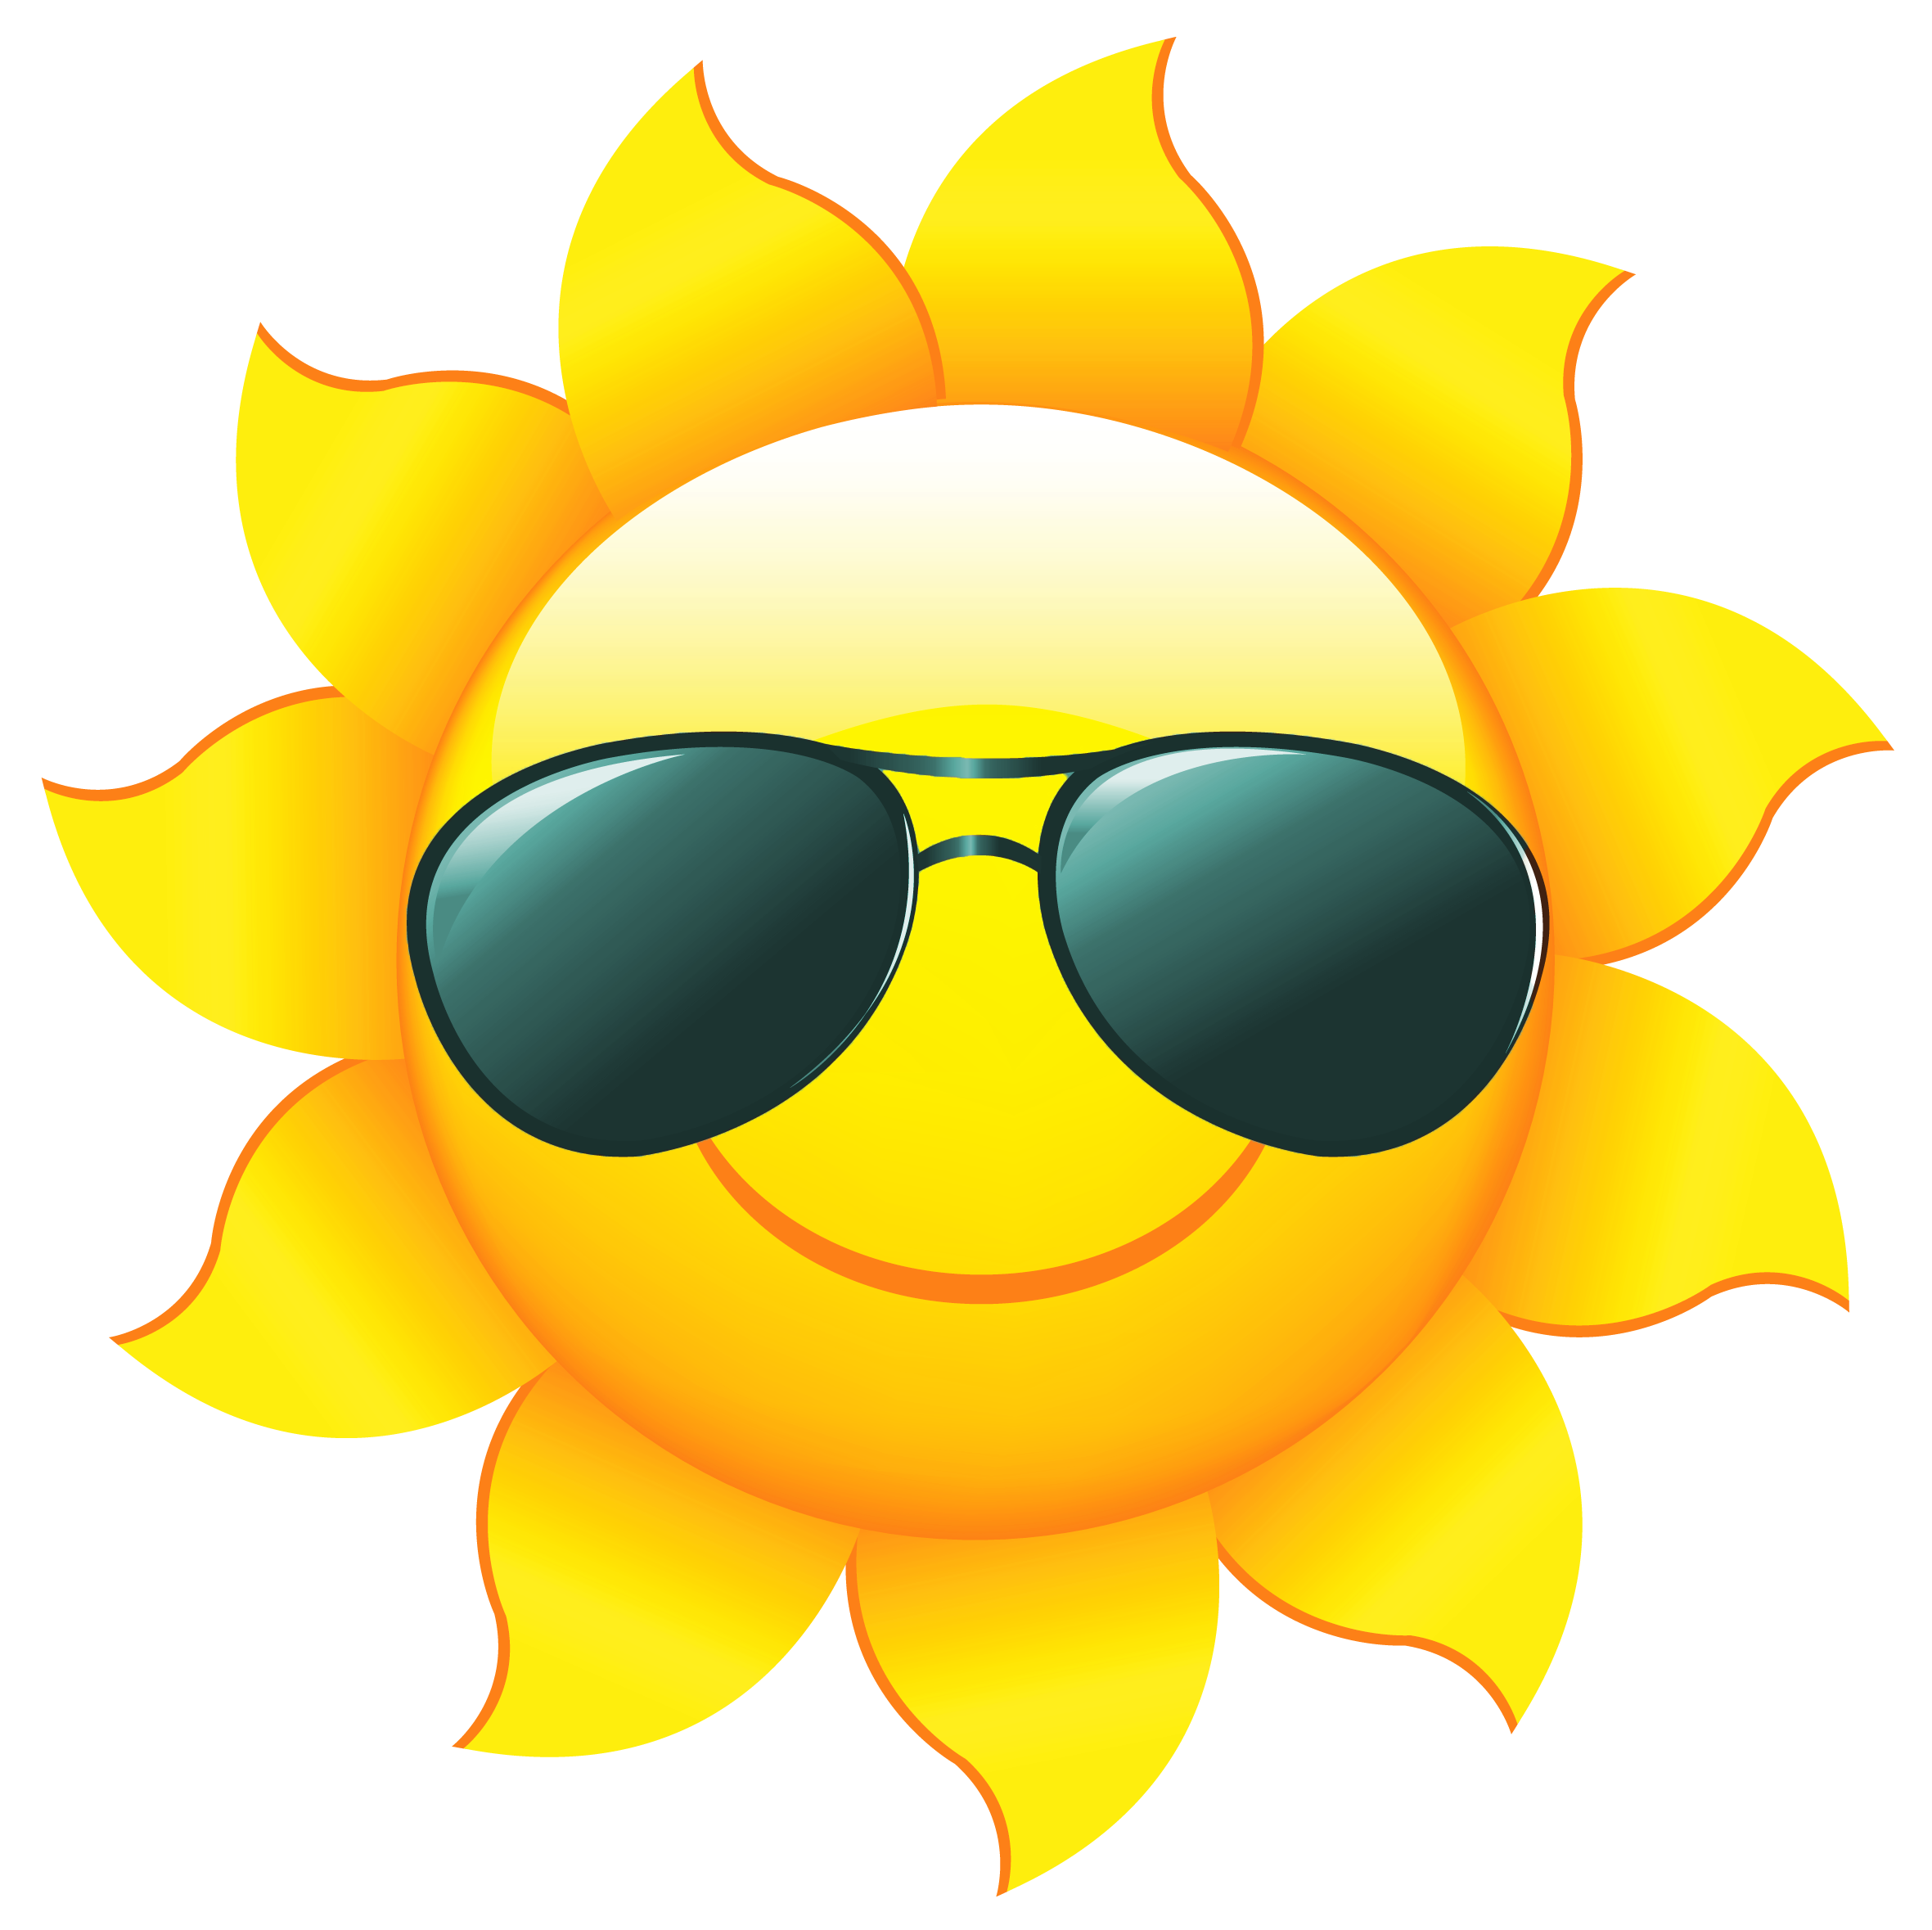 Illustration of a sun wearing sunglasses.